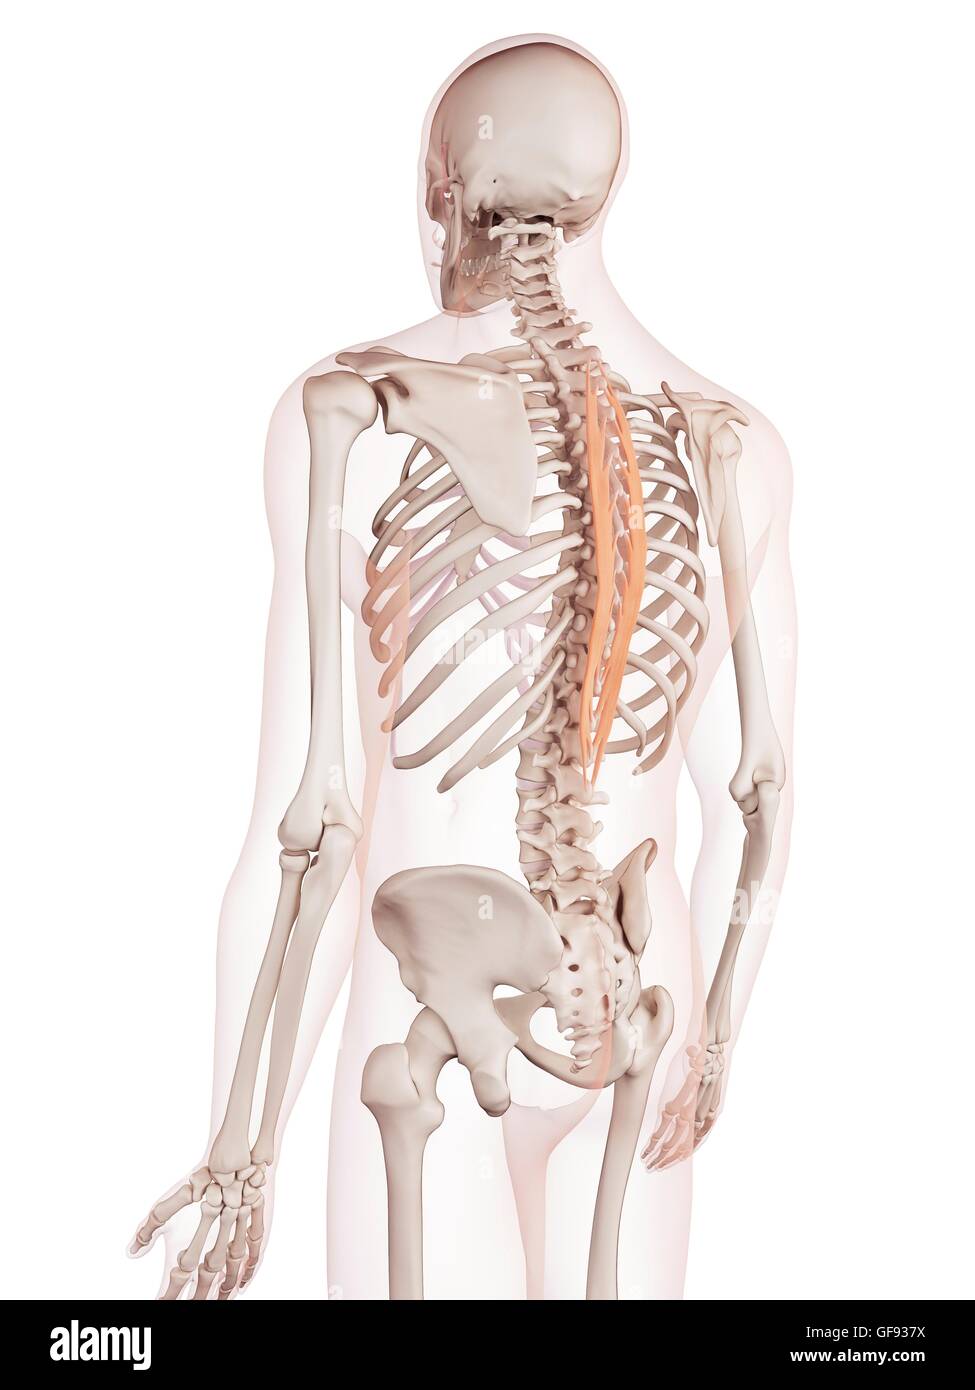 Human back muscles, illustration. Stock Photo